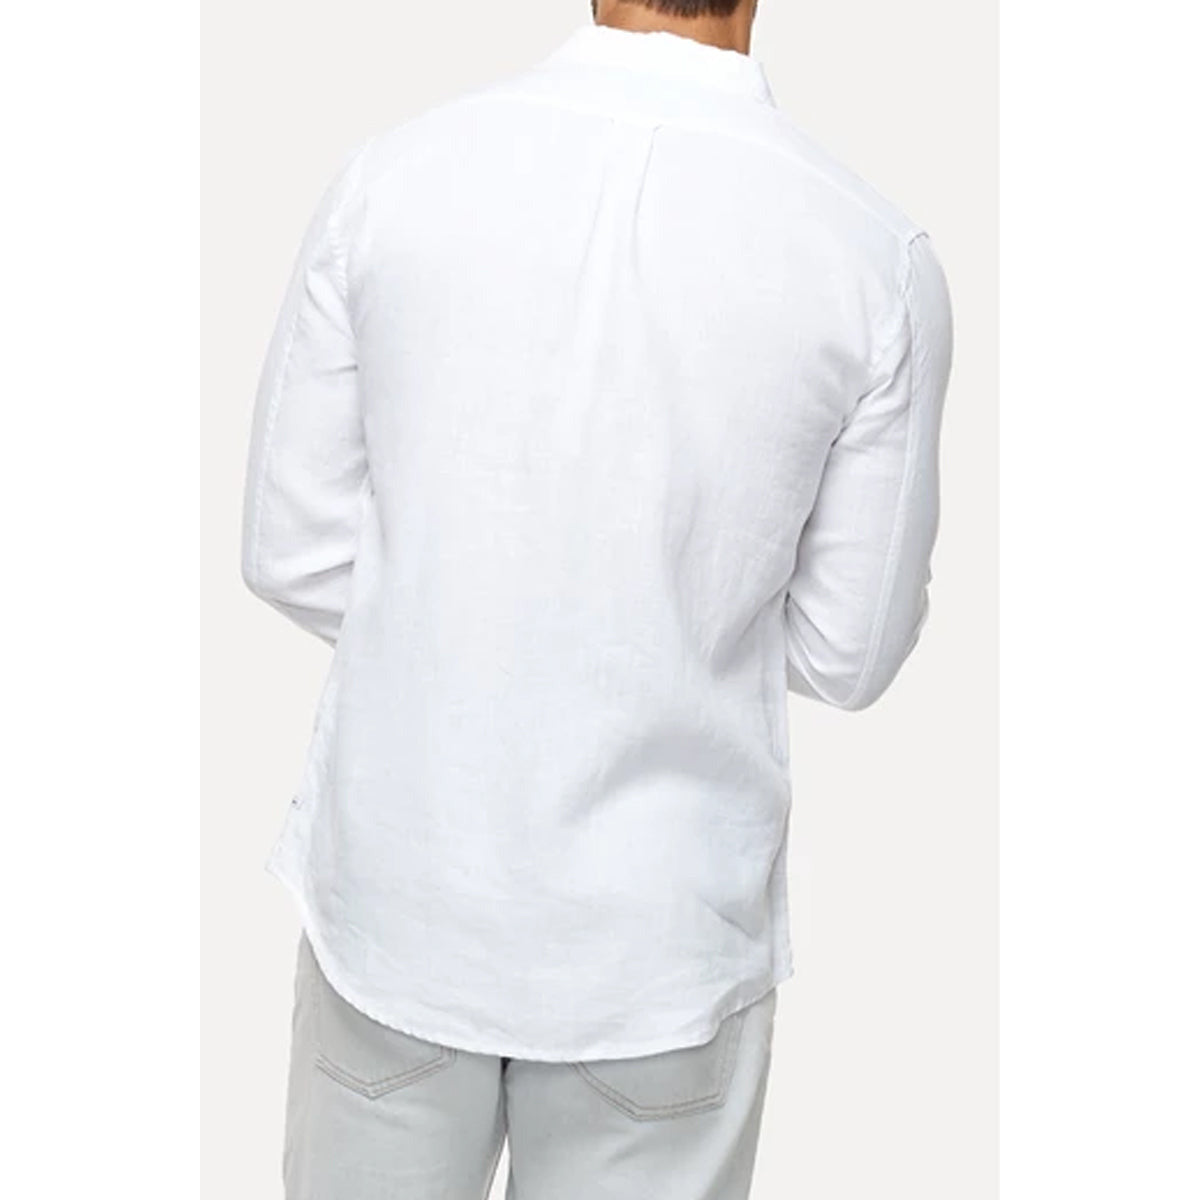 The Tennyson Linen L/S Shirt